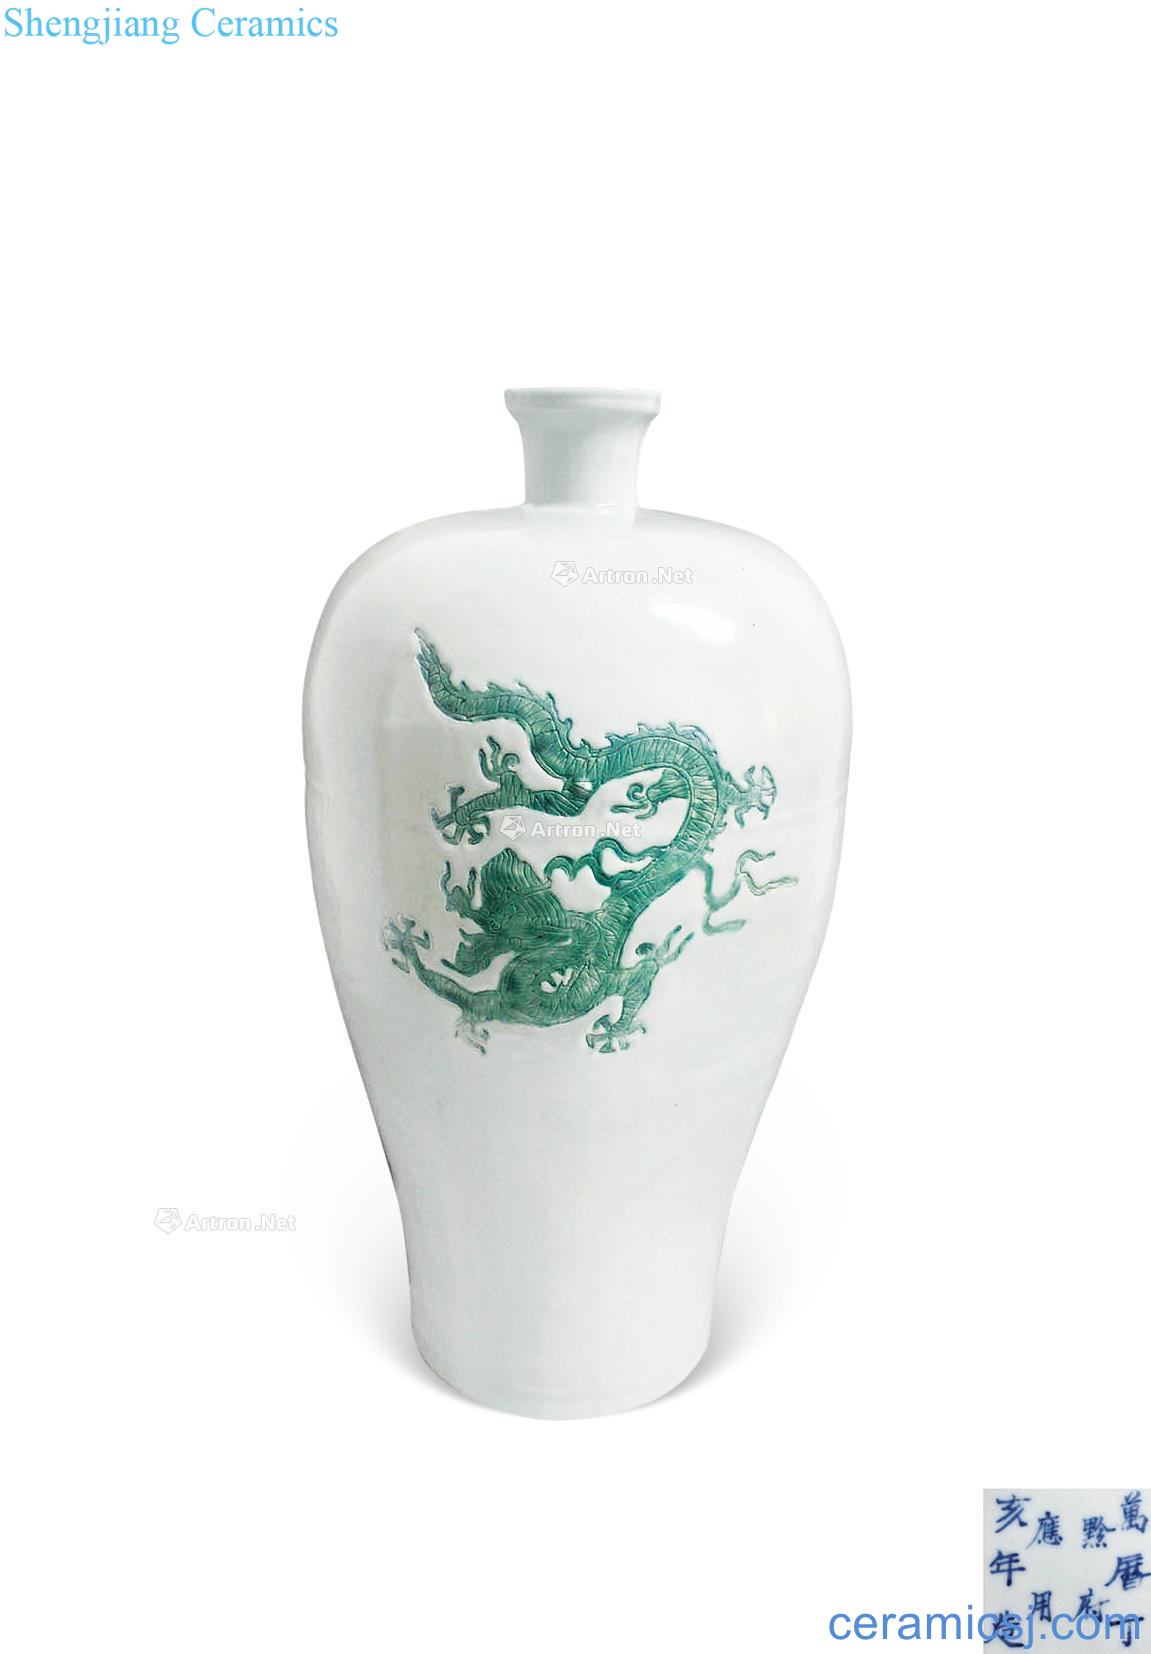 In the late Ming Green dragon grain mei craft bottles